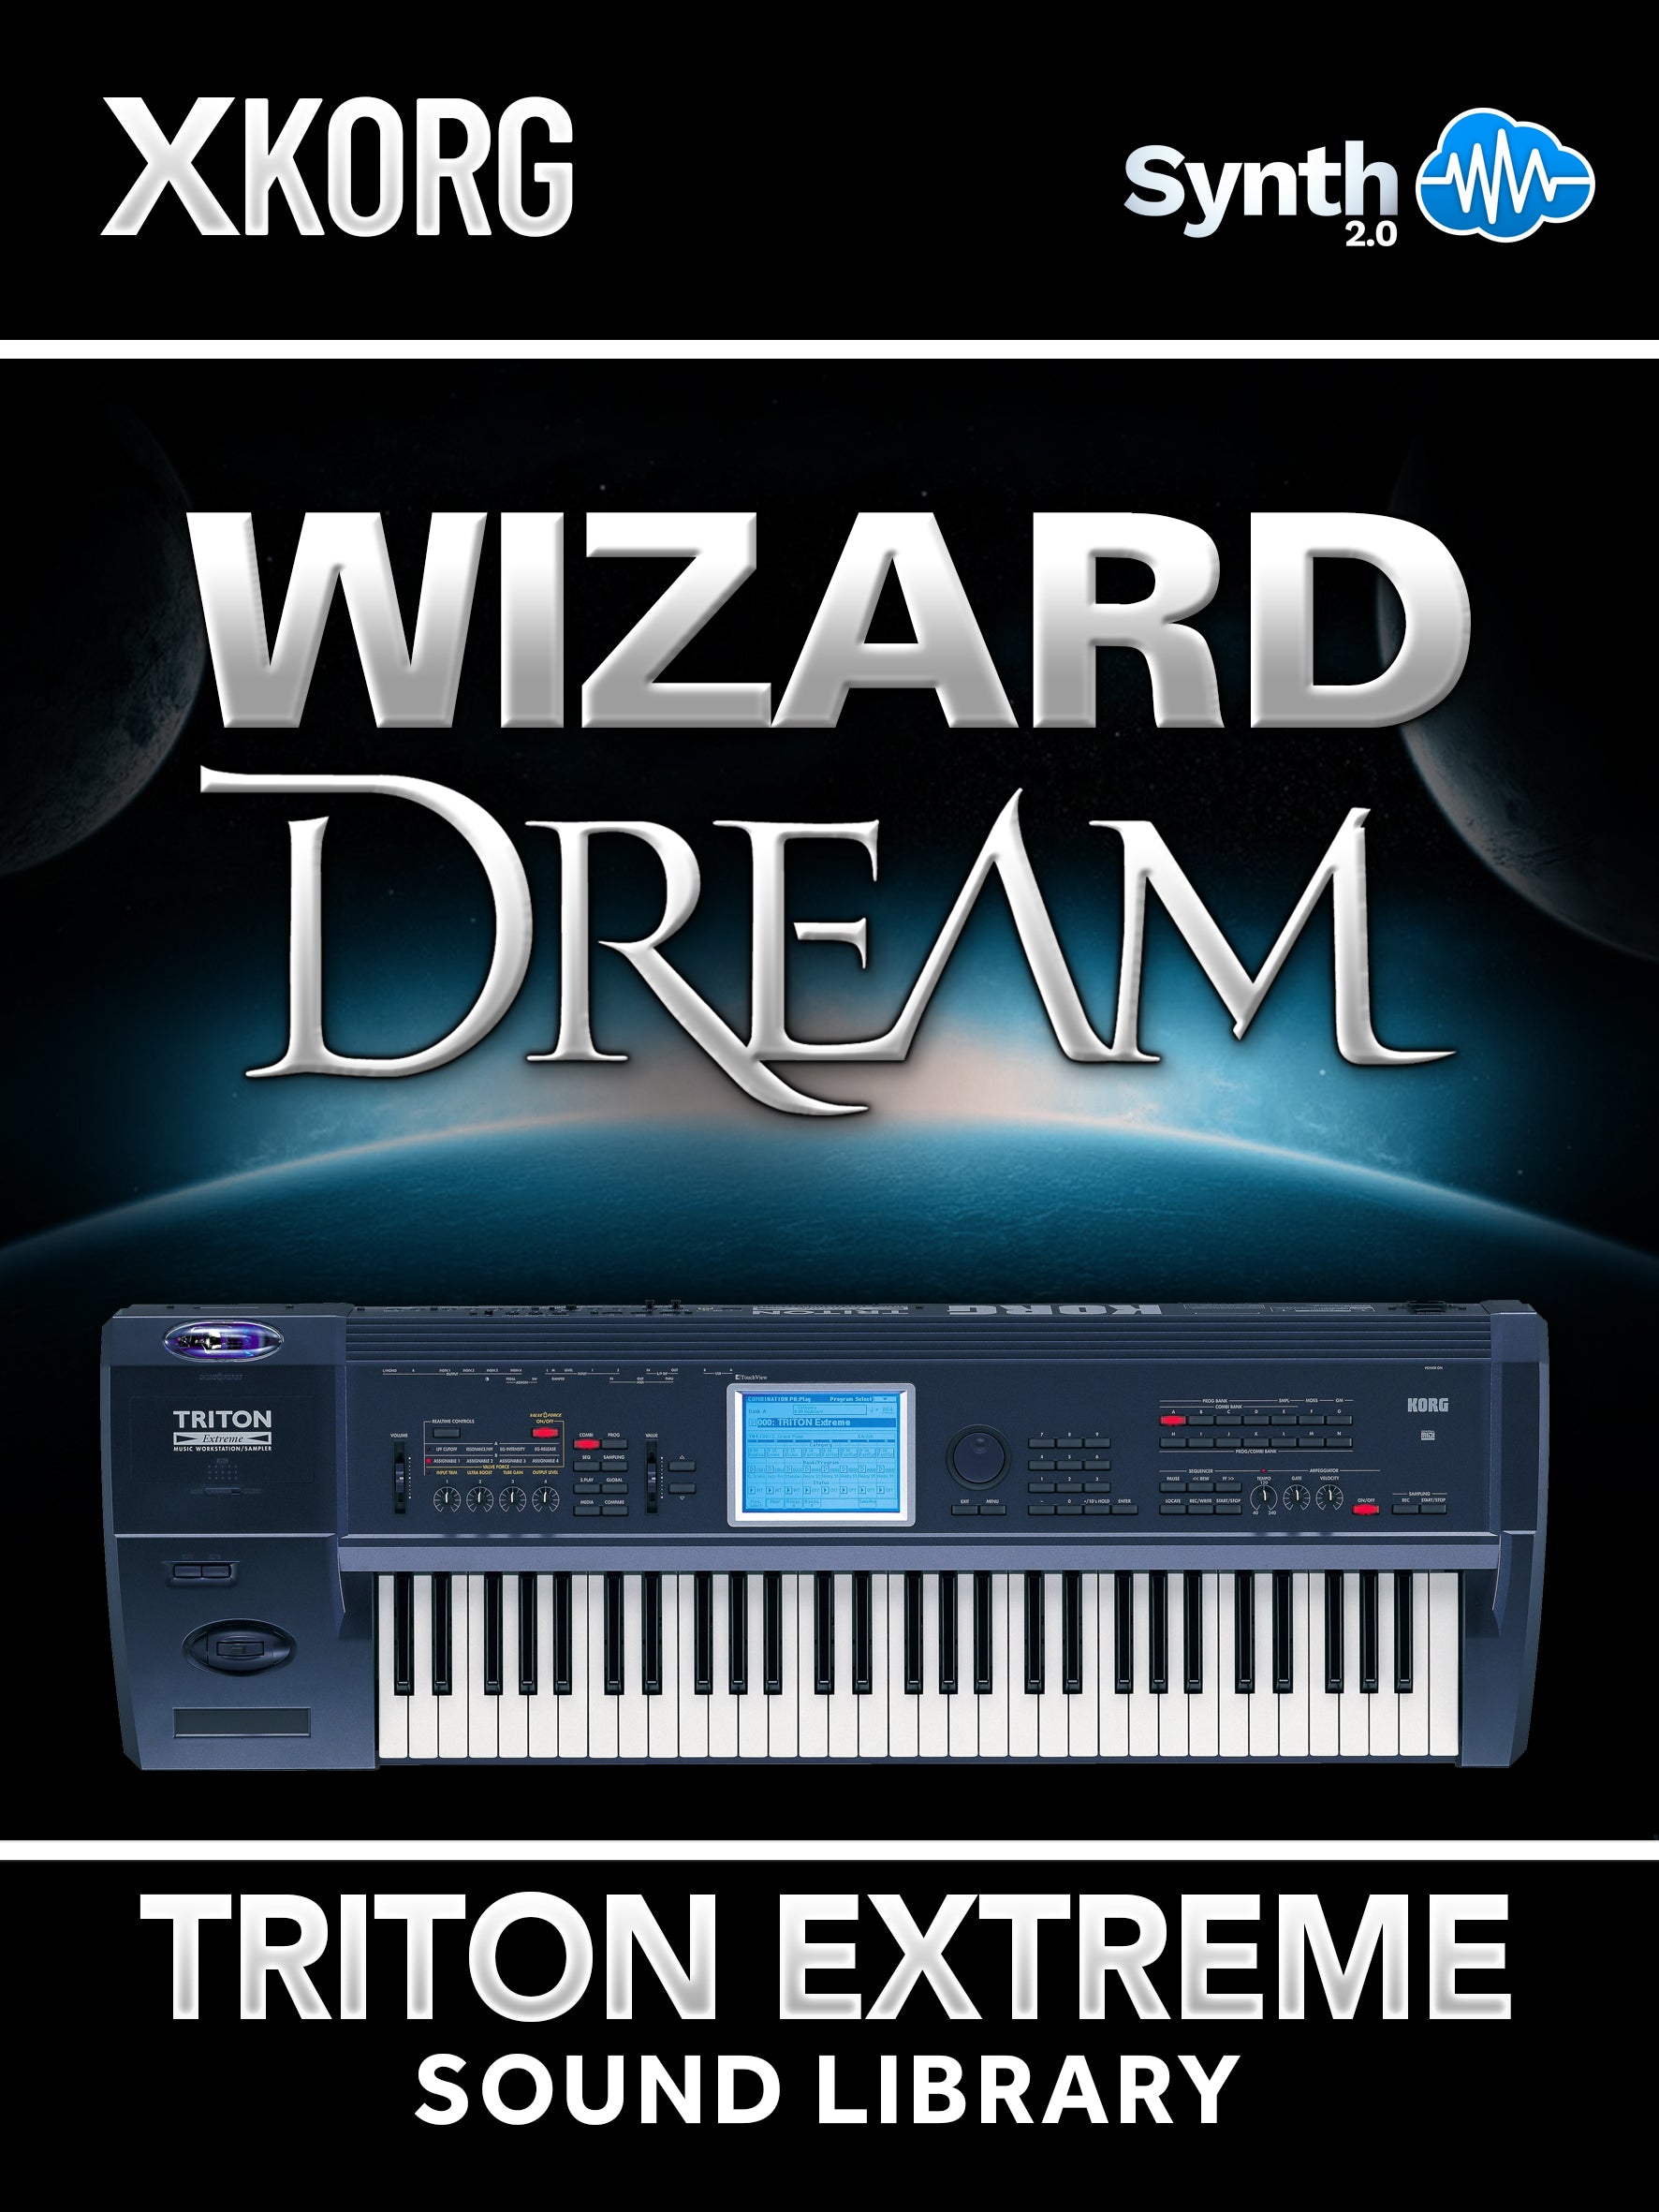 SSX107 - Wizard Dream - Korg Triton EXTREME ( 50 presets )